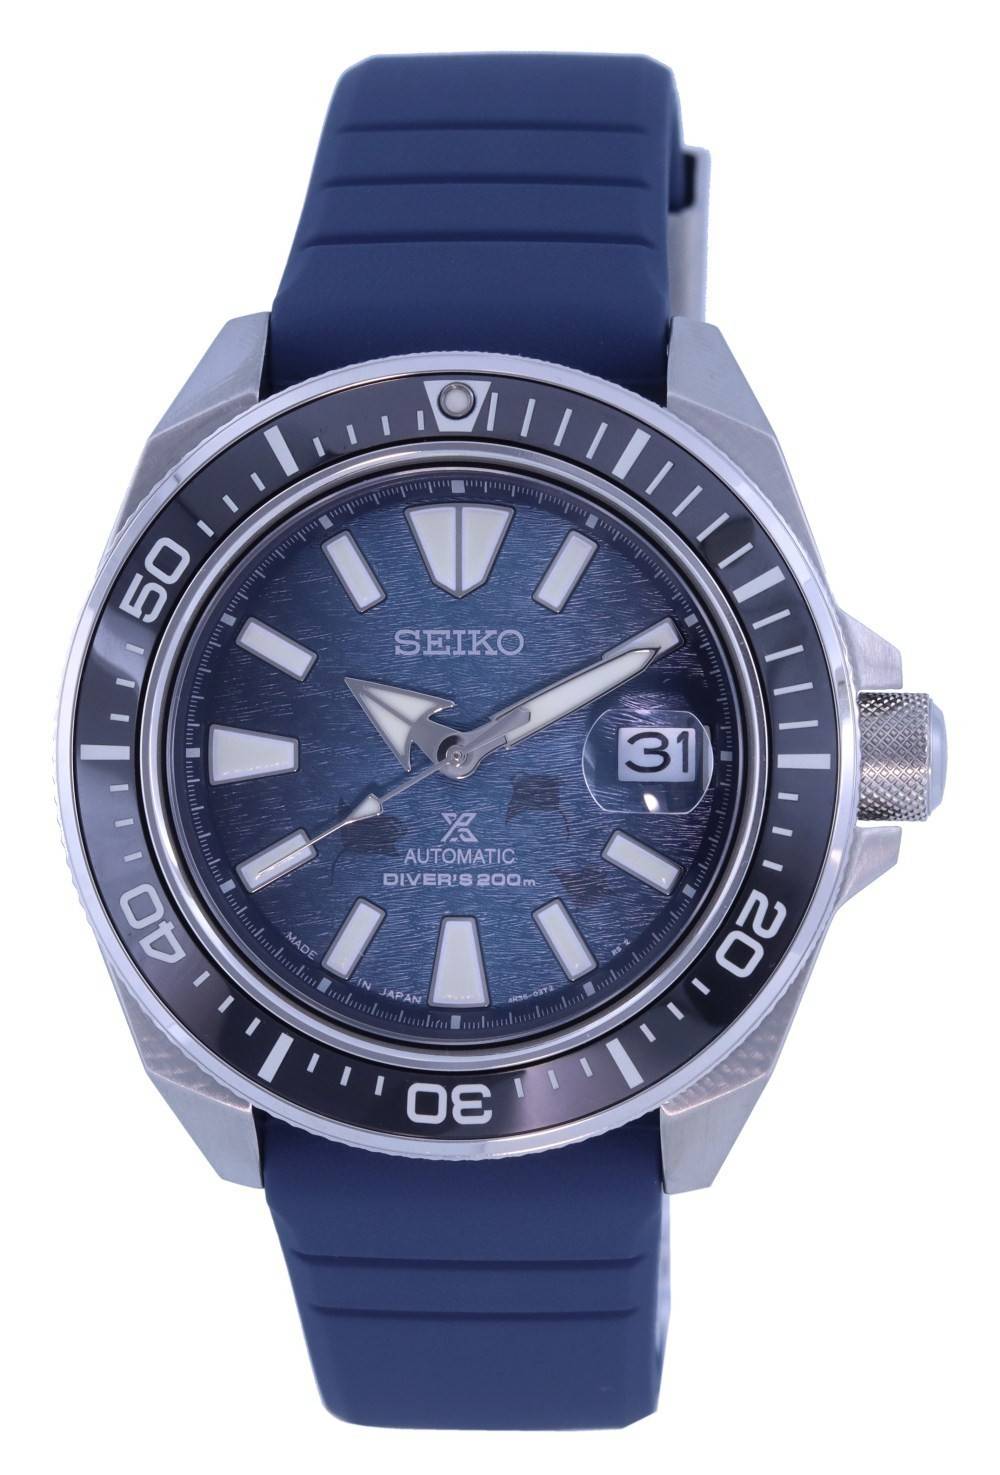 Đồng hồ Seiko Prospex Save the Ocean King Samurai Special Edition Automatic  Diver's SRPF79 SRPF79J1 SRPF79J 200M Đồng hồ nam vi